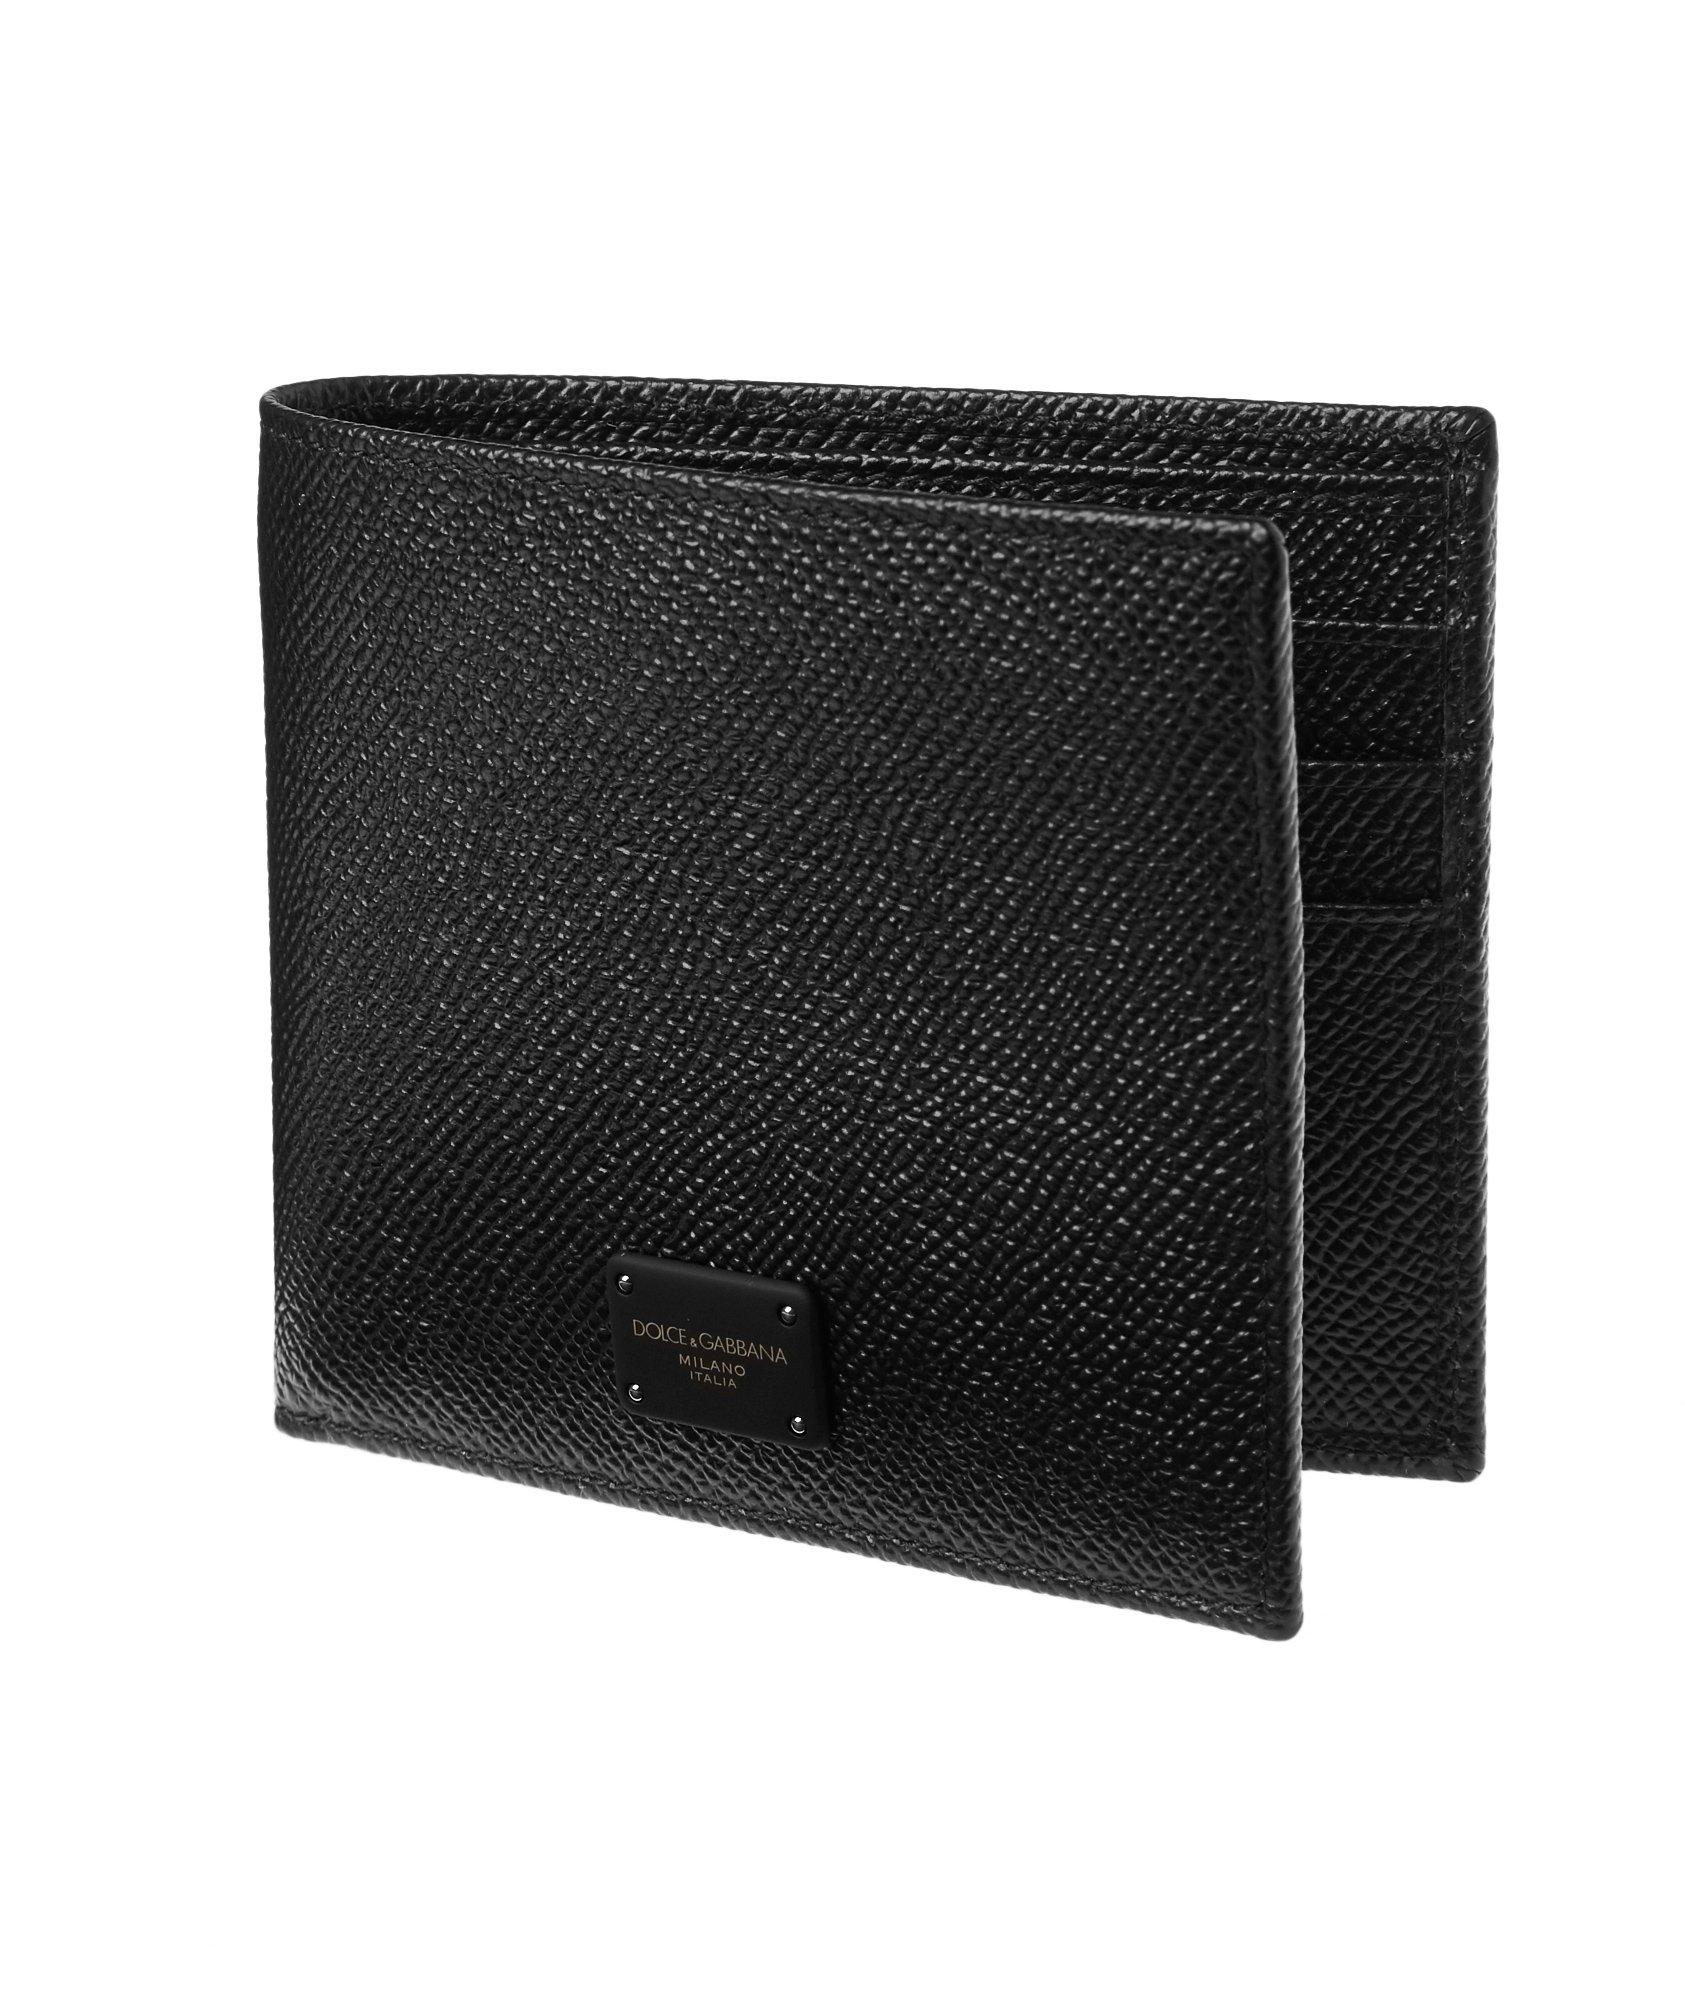 Leather Bi-Fold Wallet image 0